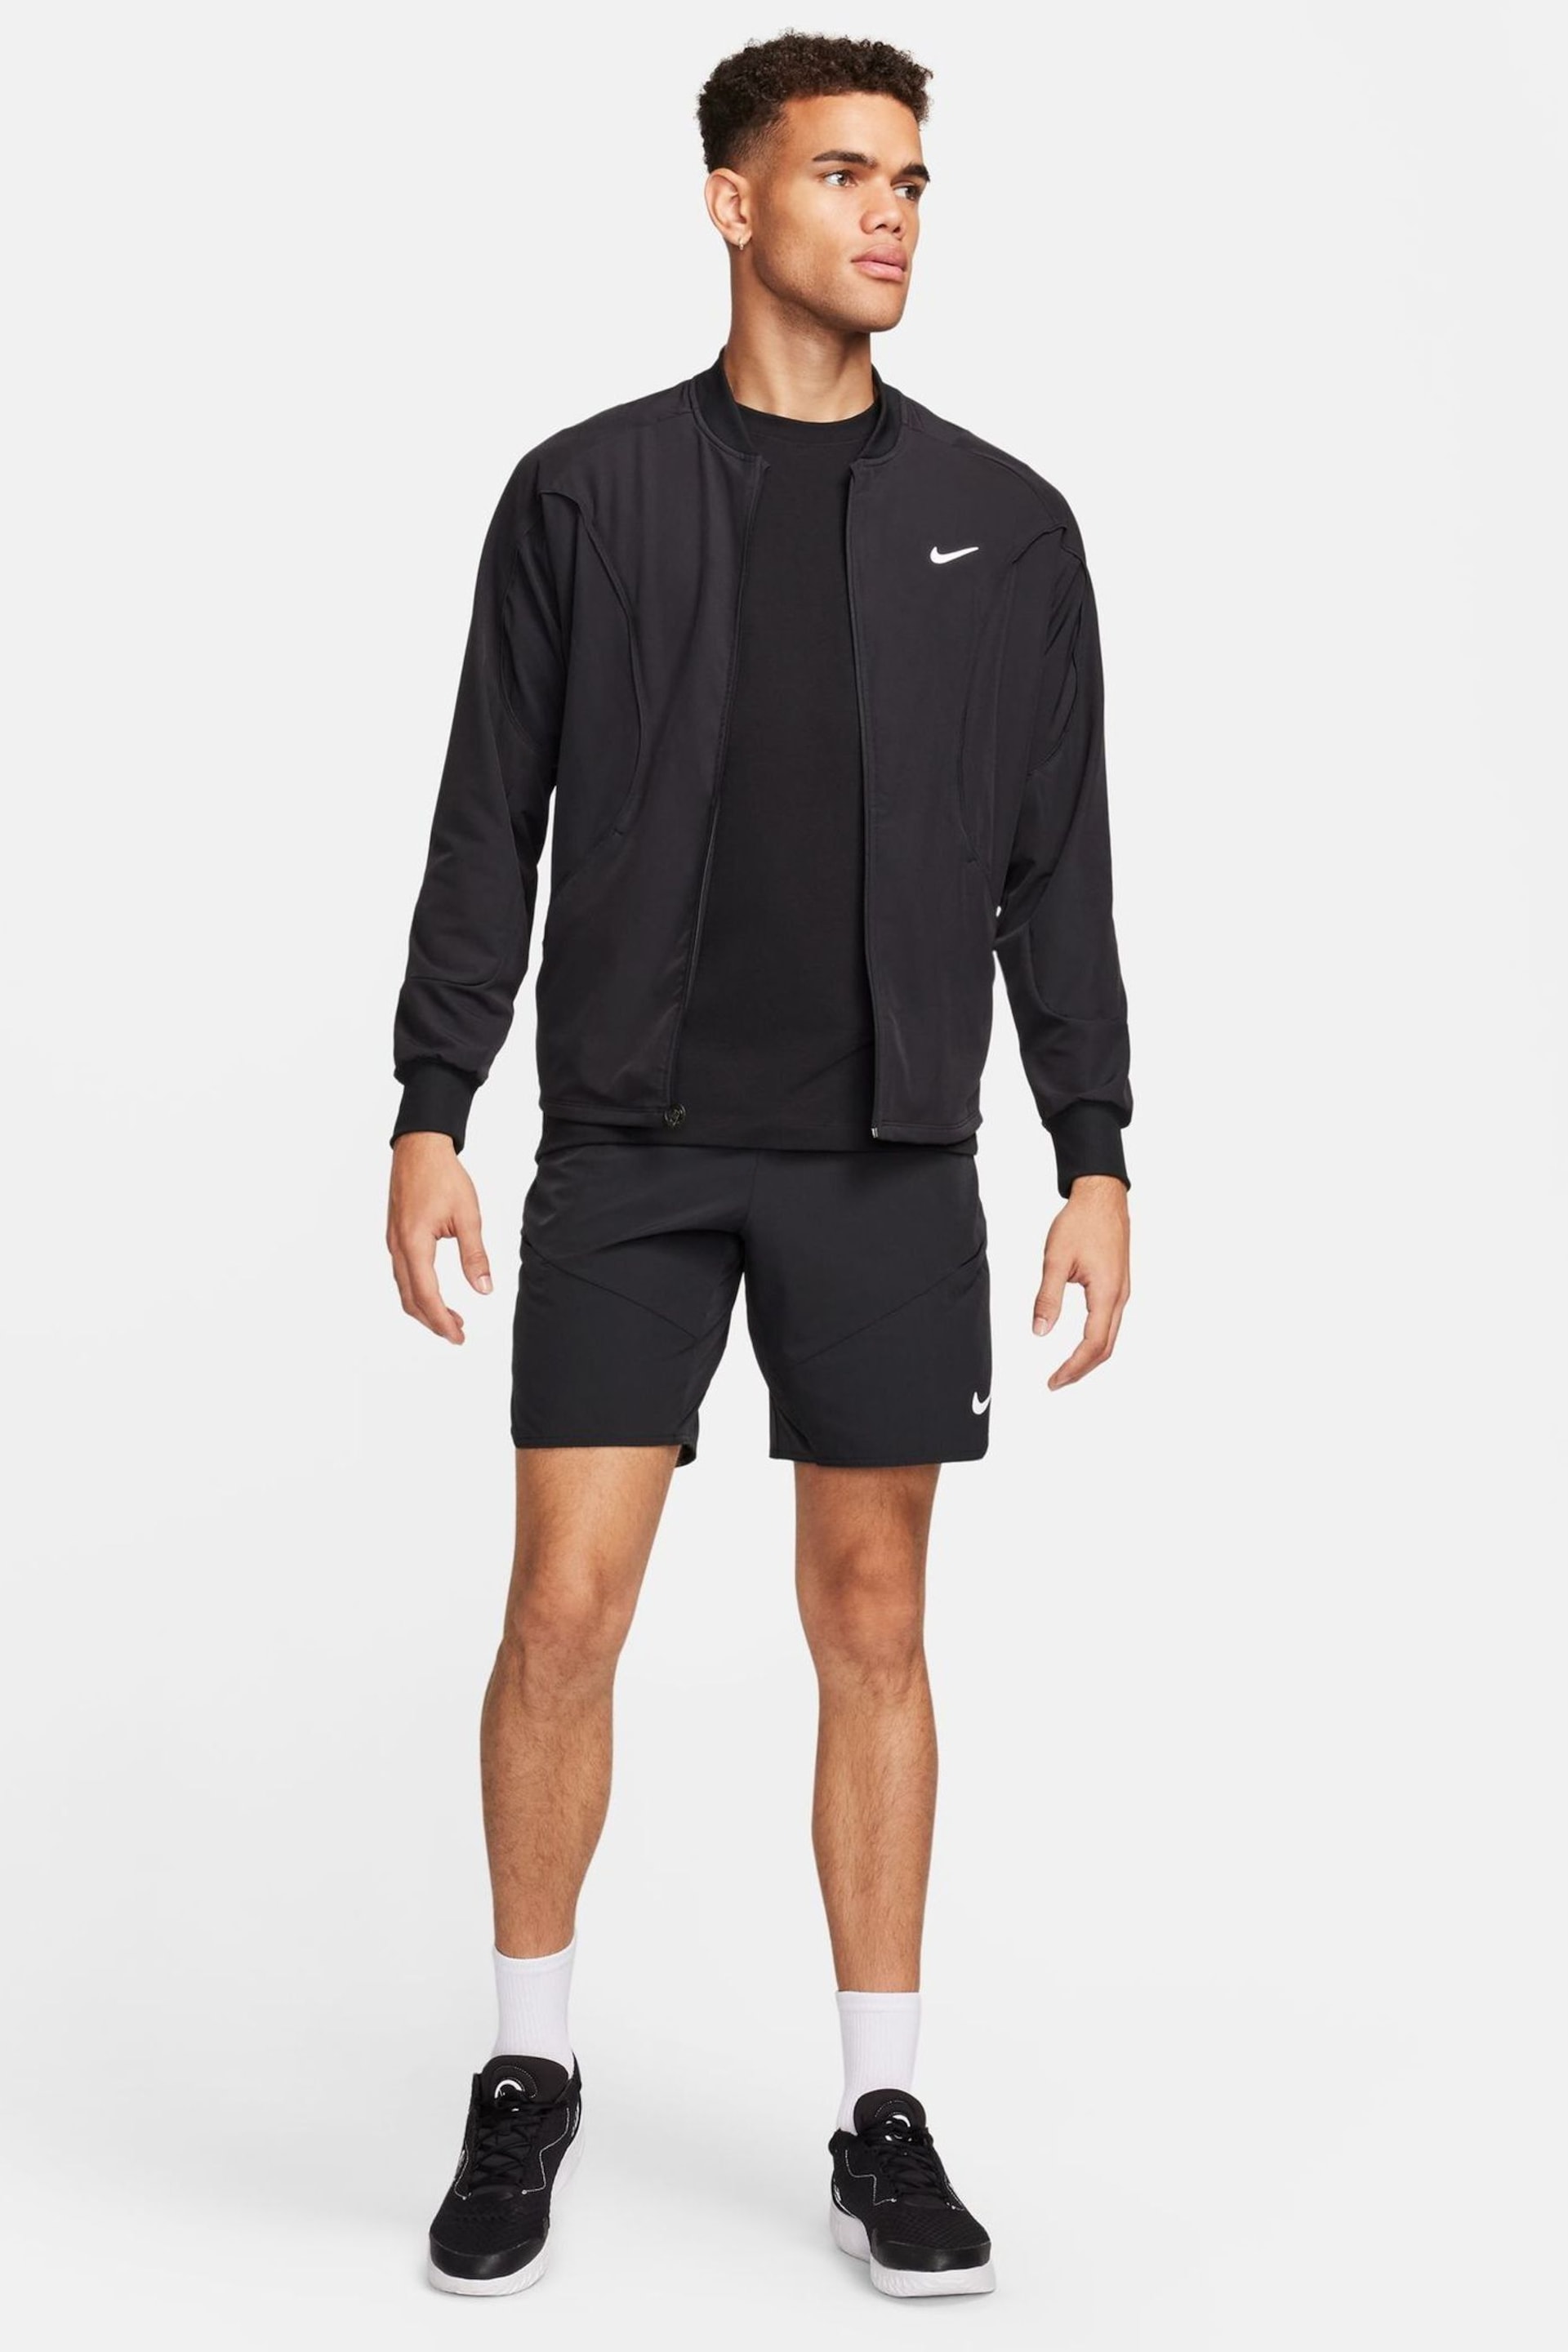 Nike Black Court Advantage Dri-FIT Tennis Jacket - Image 6 of 6